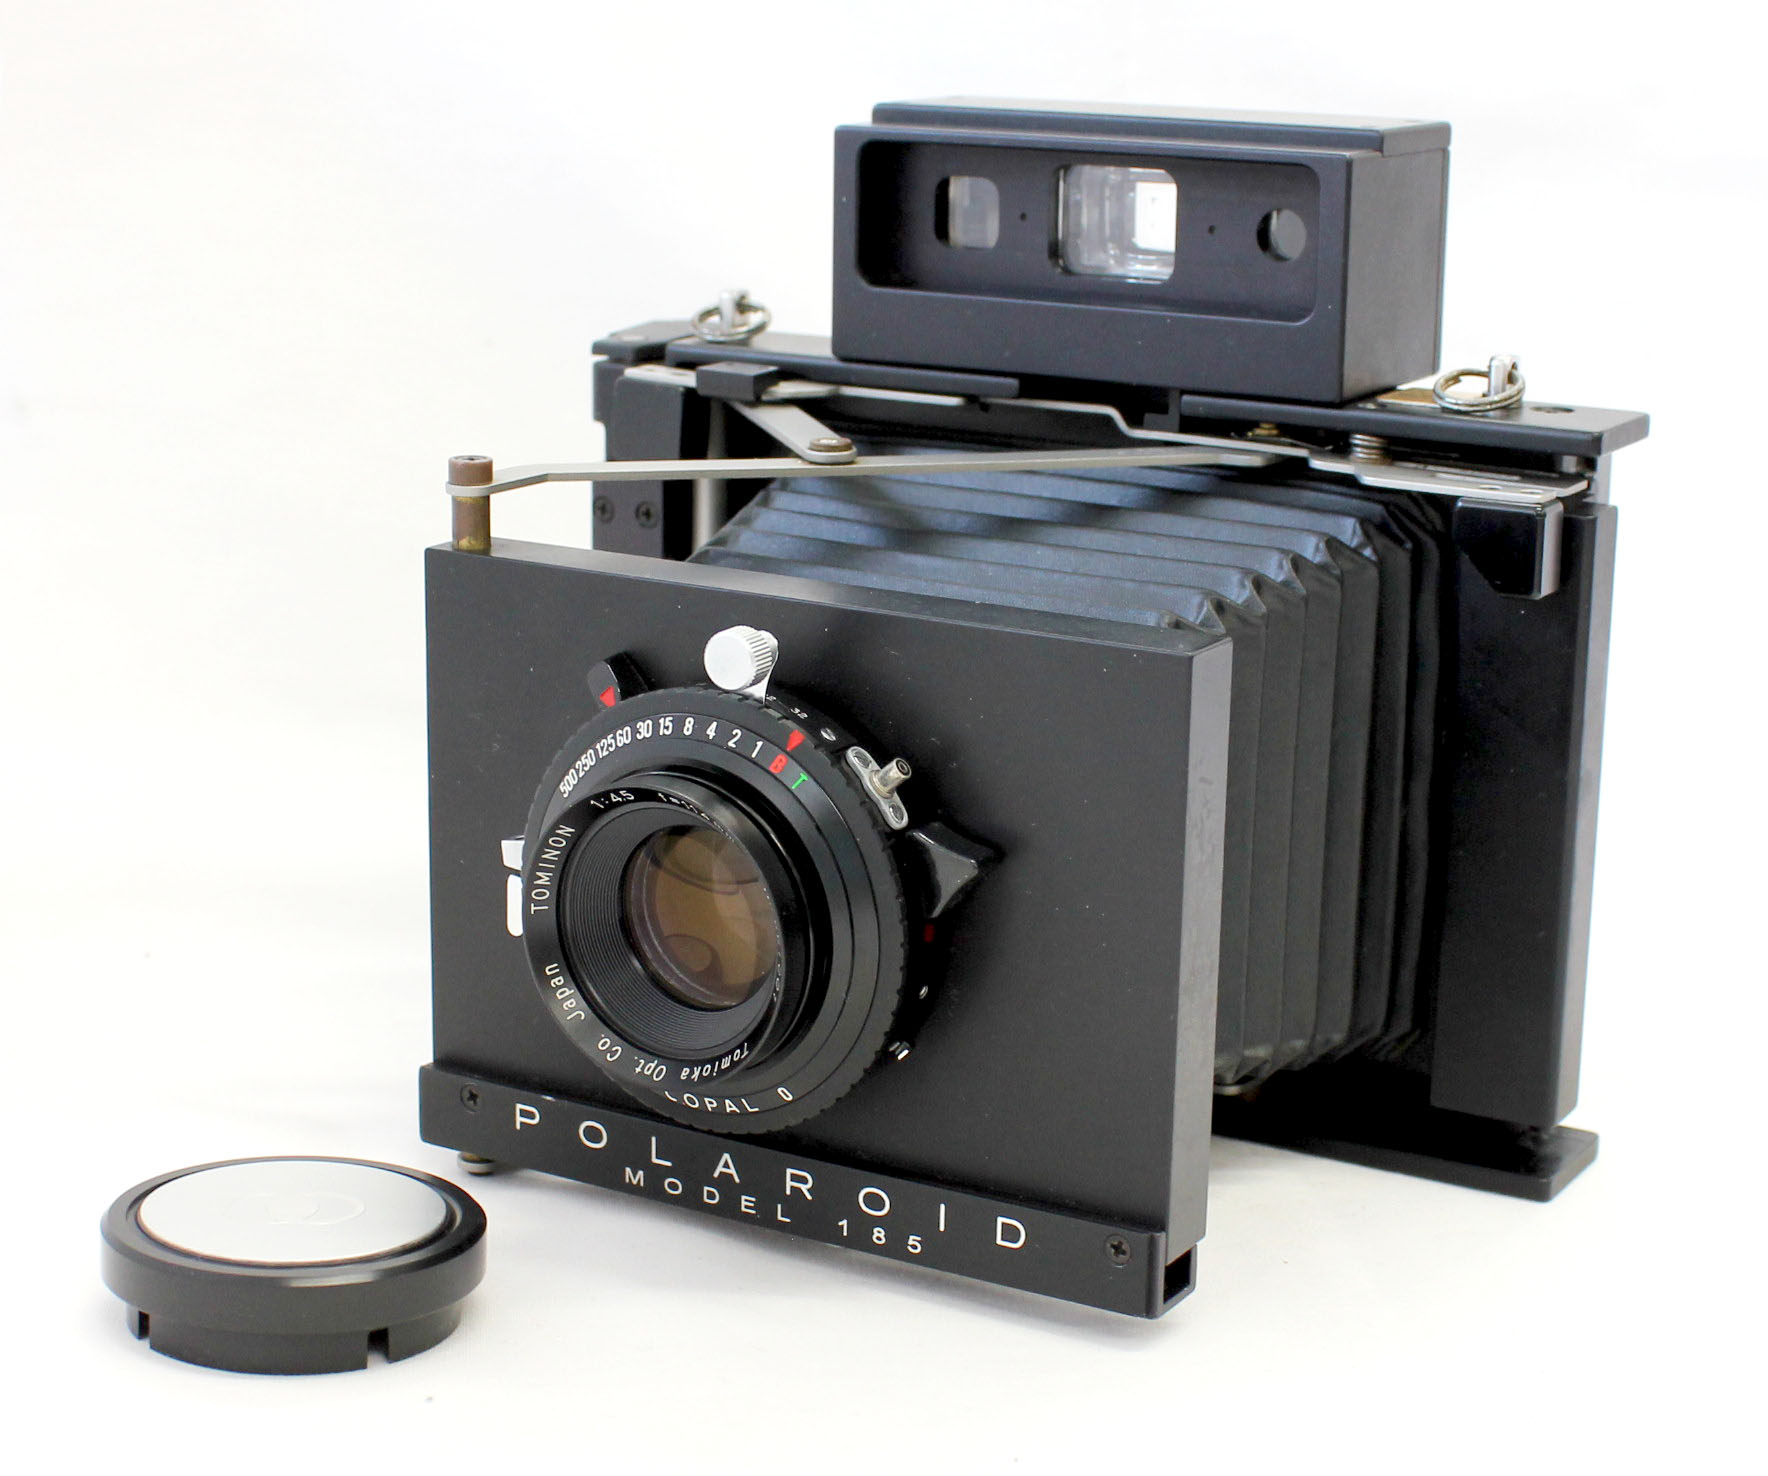 [Near Mint] Polaroid Land Camera Model 185 Millennium (2000) Japan Limited Model w/ Tominon 114mm F/4.5